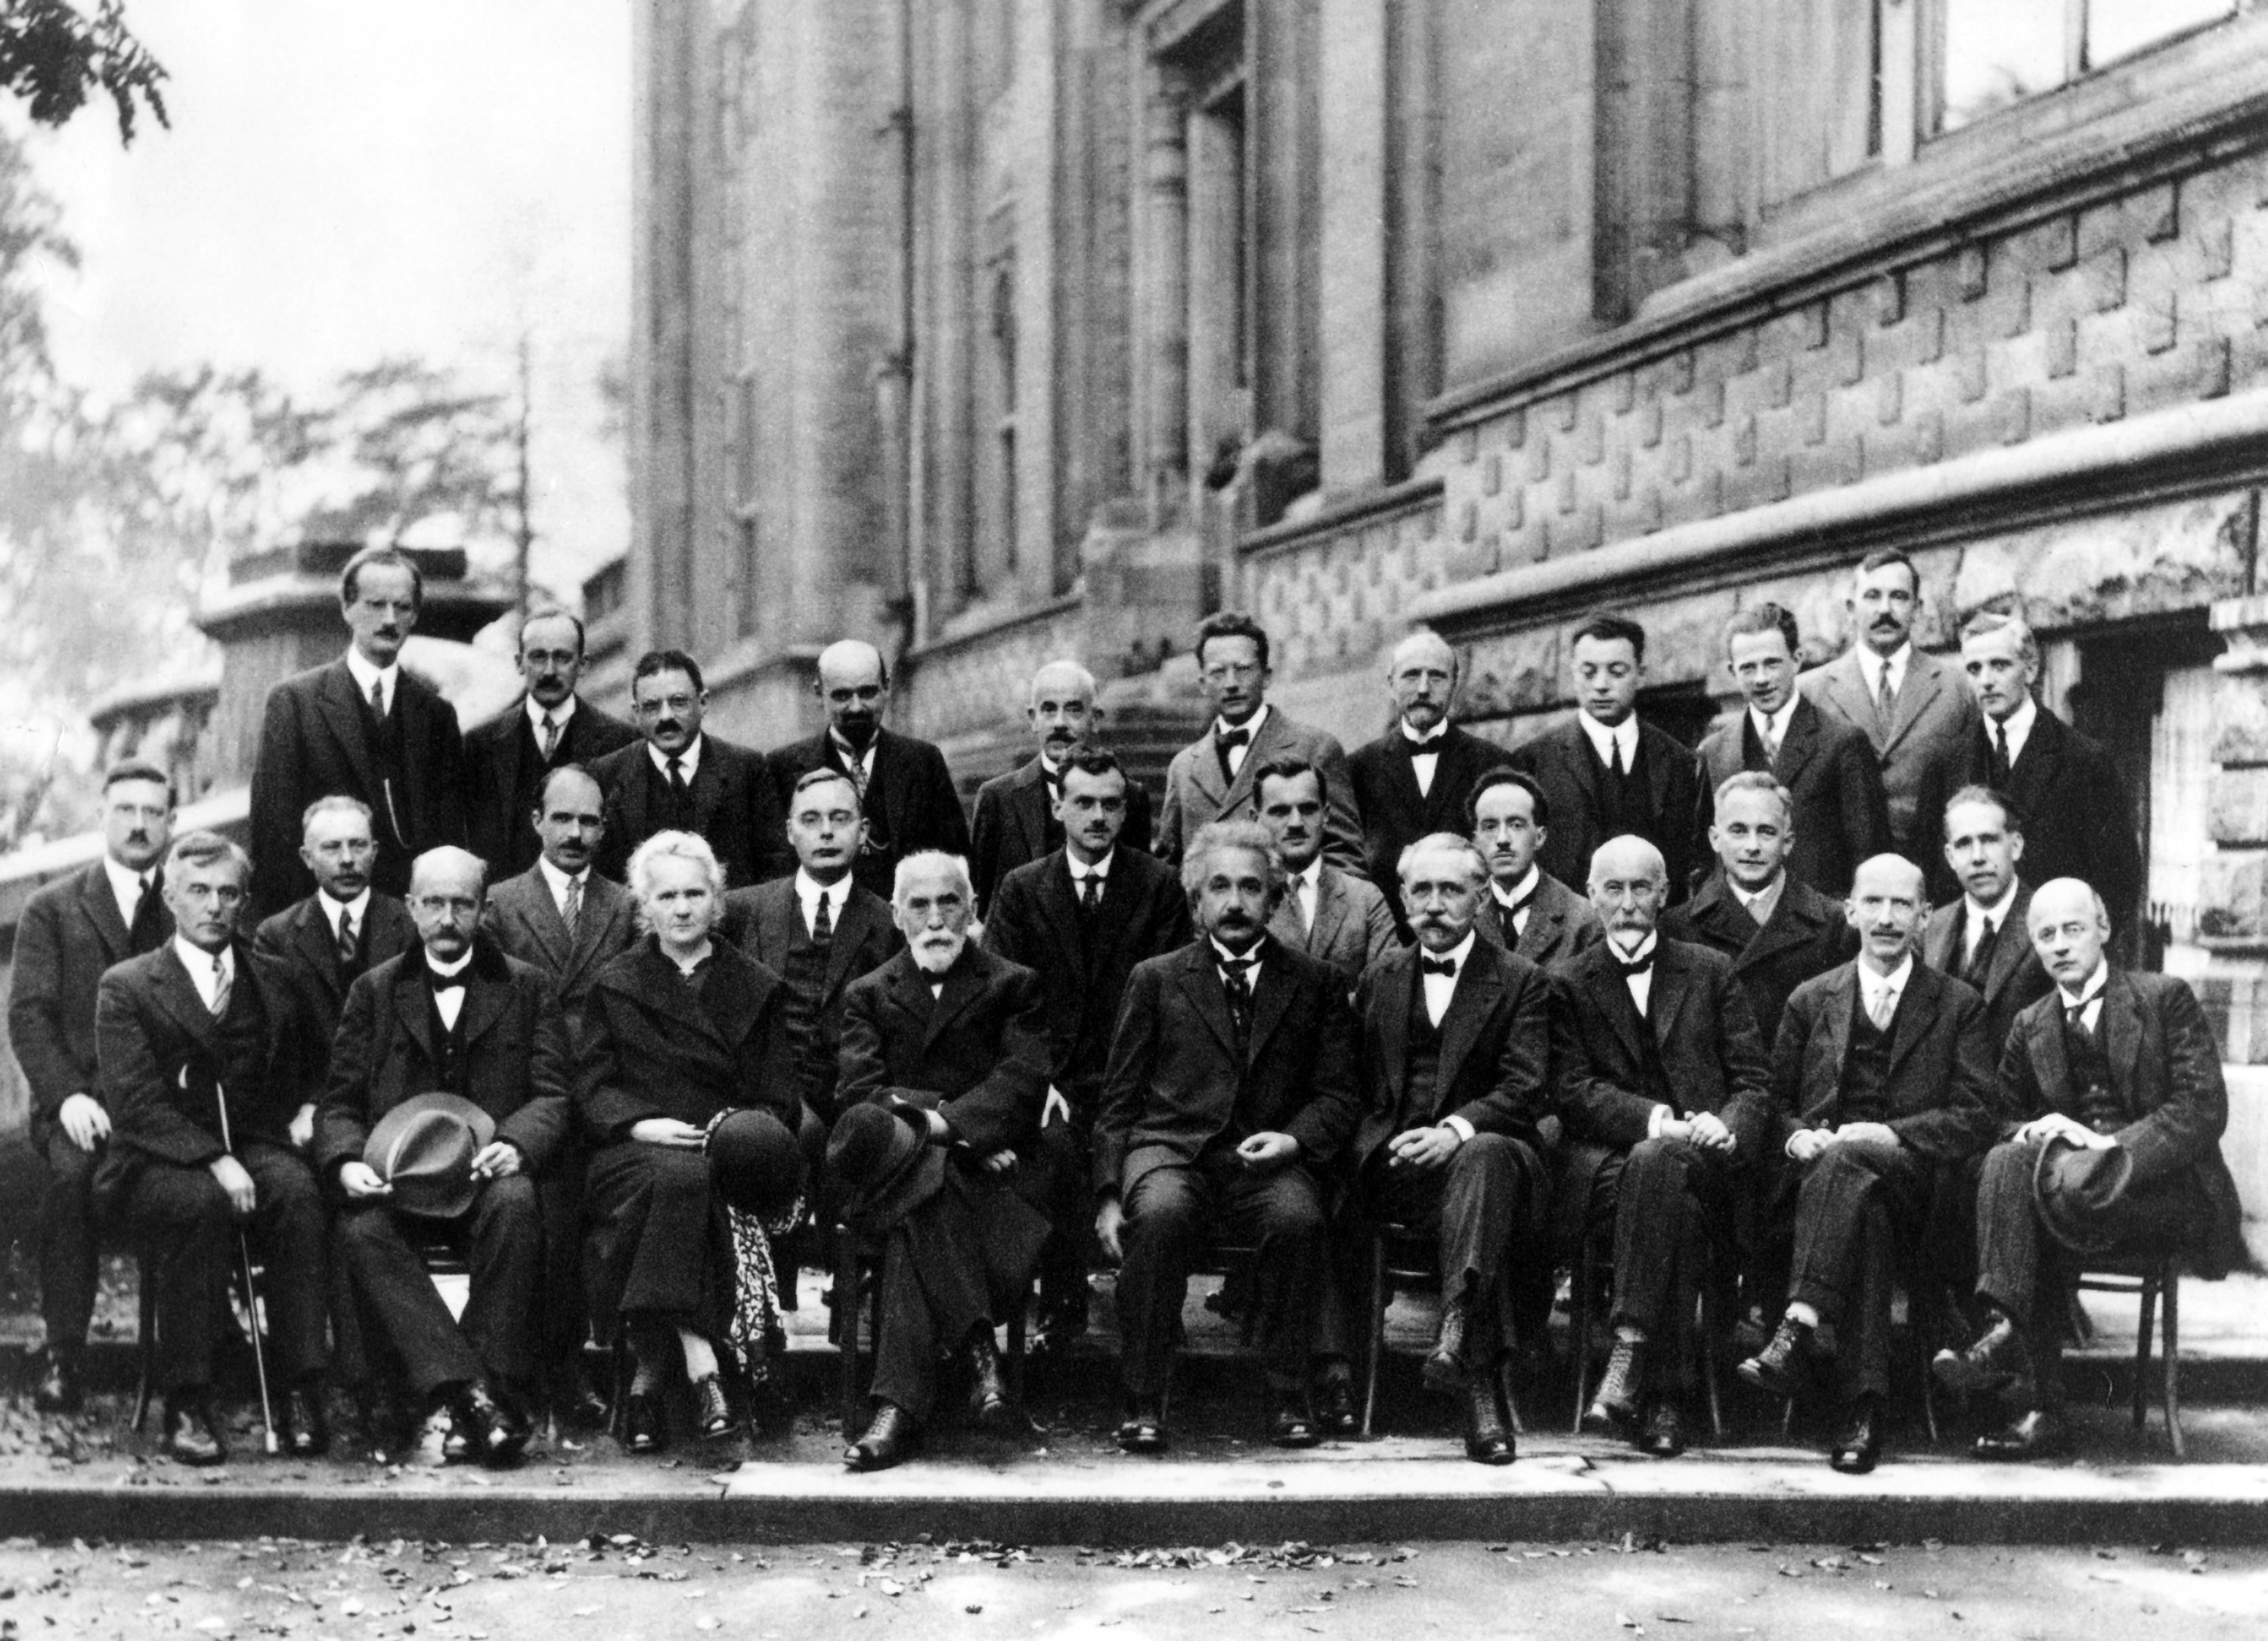 1927 Solvay Conference on Quantum Mechanics. Photograph by Benjamin Couprie, Institut International de Physique Solvay, Brussels, Belgium.